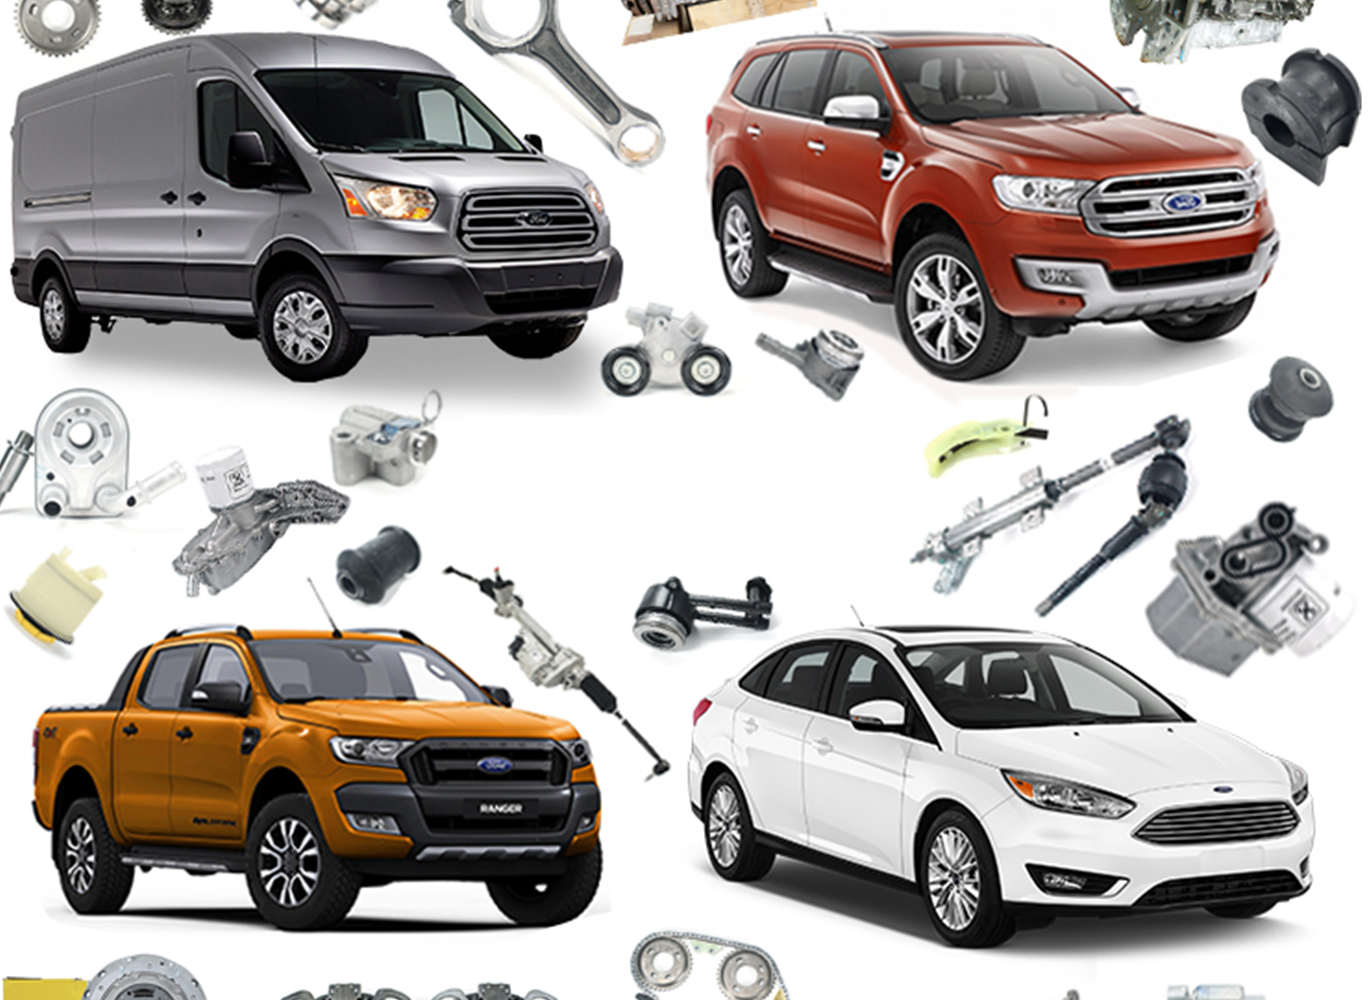 Top 20 Auto Parts Manufacturers